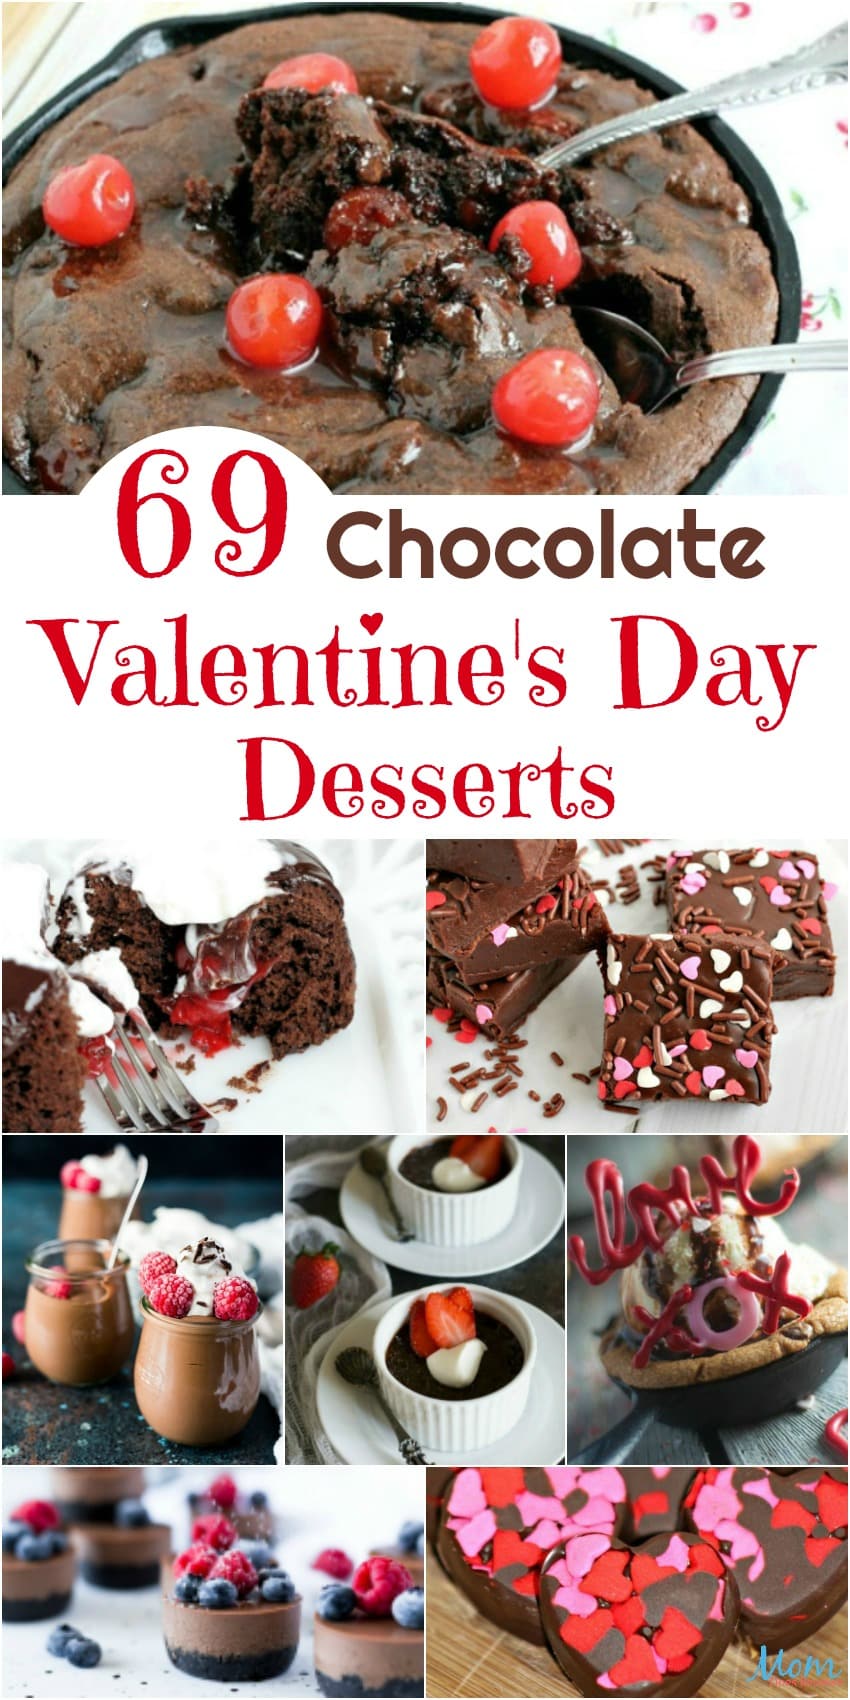 69 Chocolate Valentine’s Day Desserts to Sweeten Your Day #Sweet2019  #food #foodie #desserts #chocolate #valentinesday 